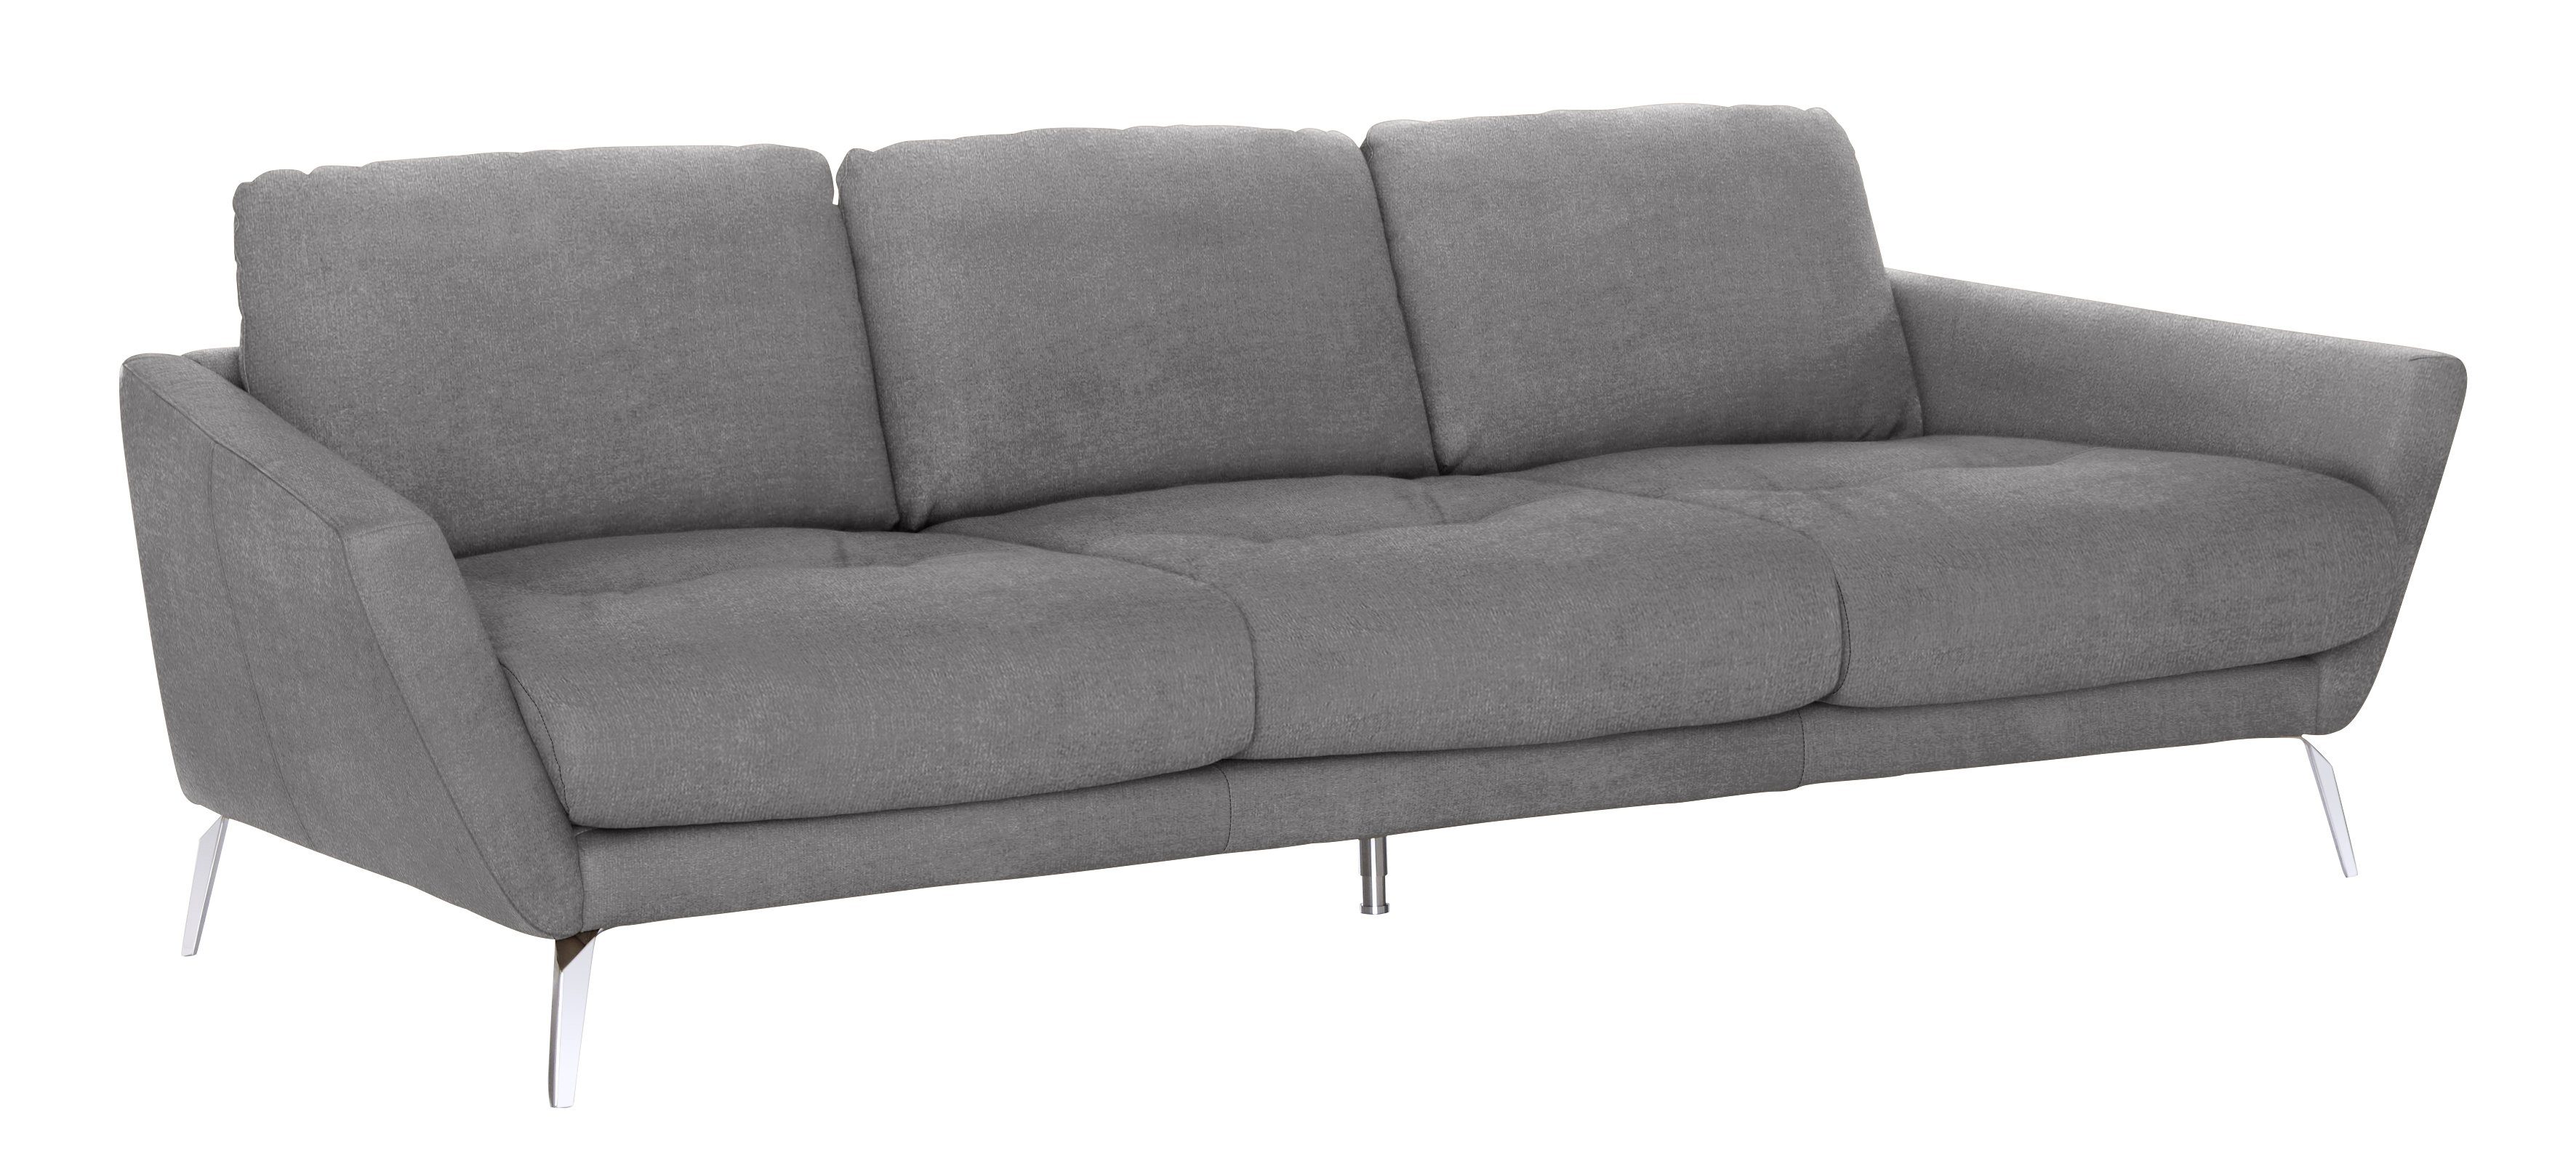 W.SCHILLIG Big-Sofa im Füße Heftung mit softy, dekorativer Chrom Sitz, glänzend